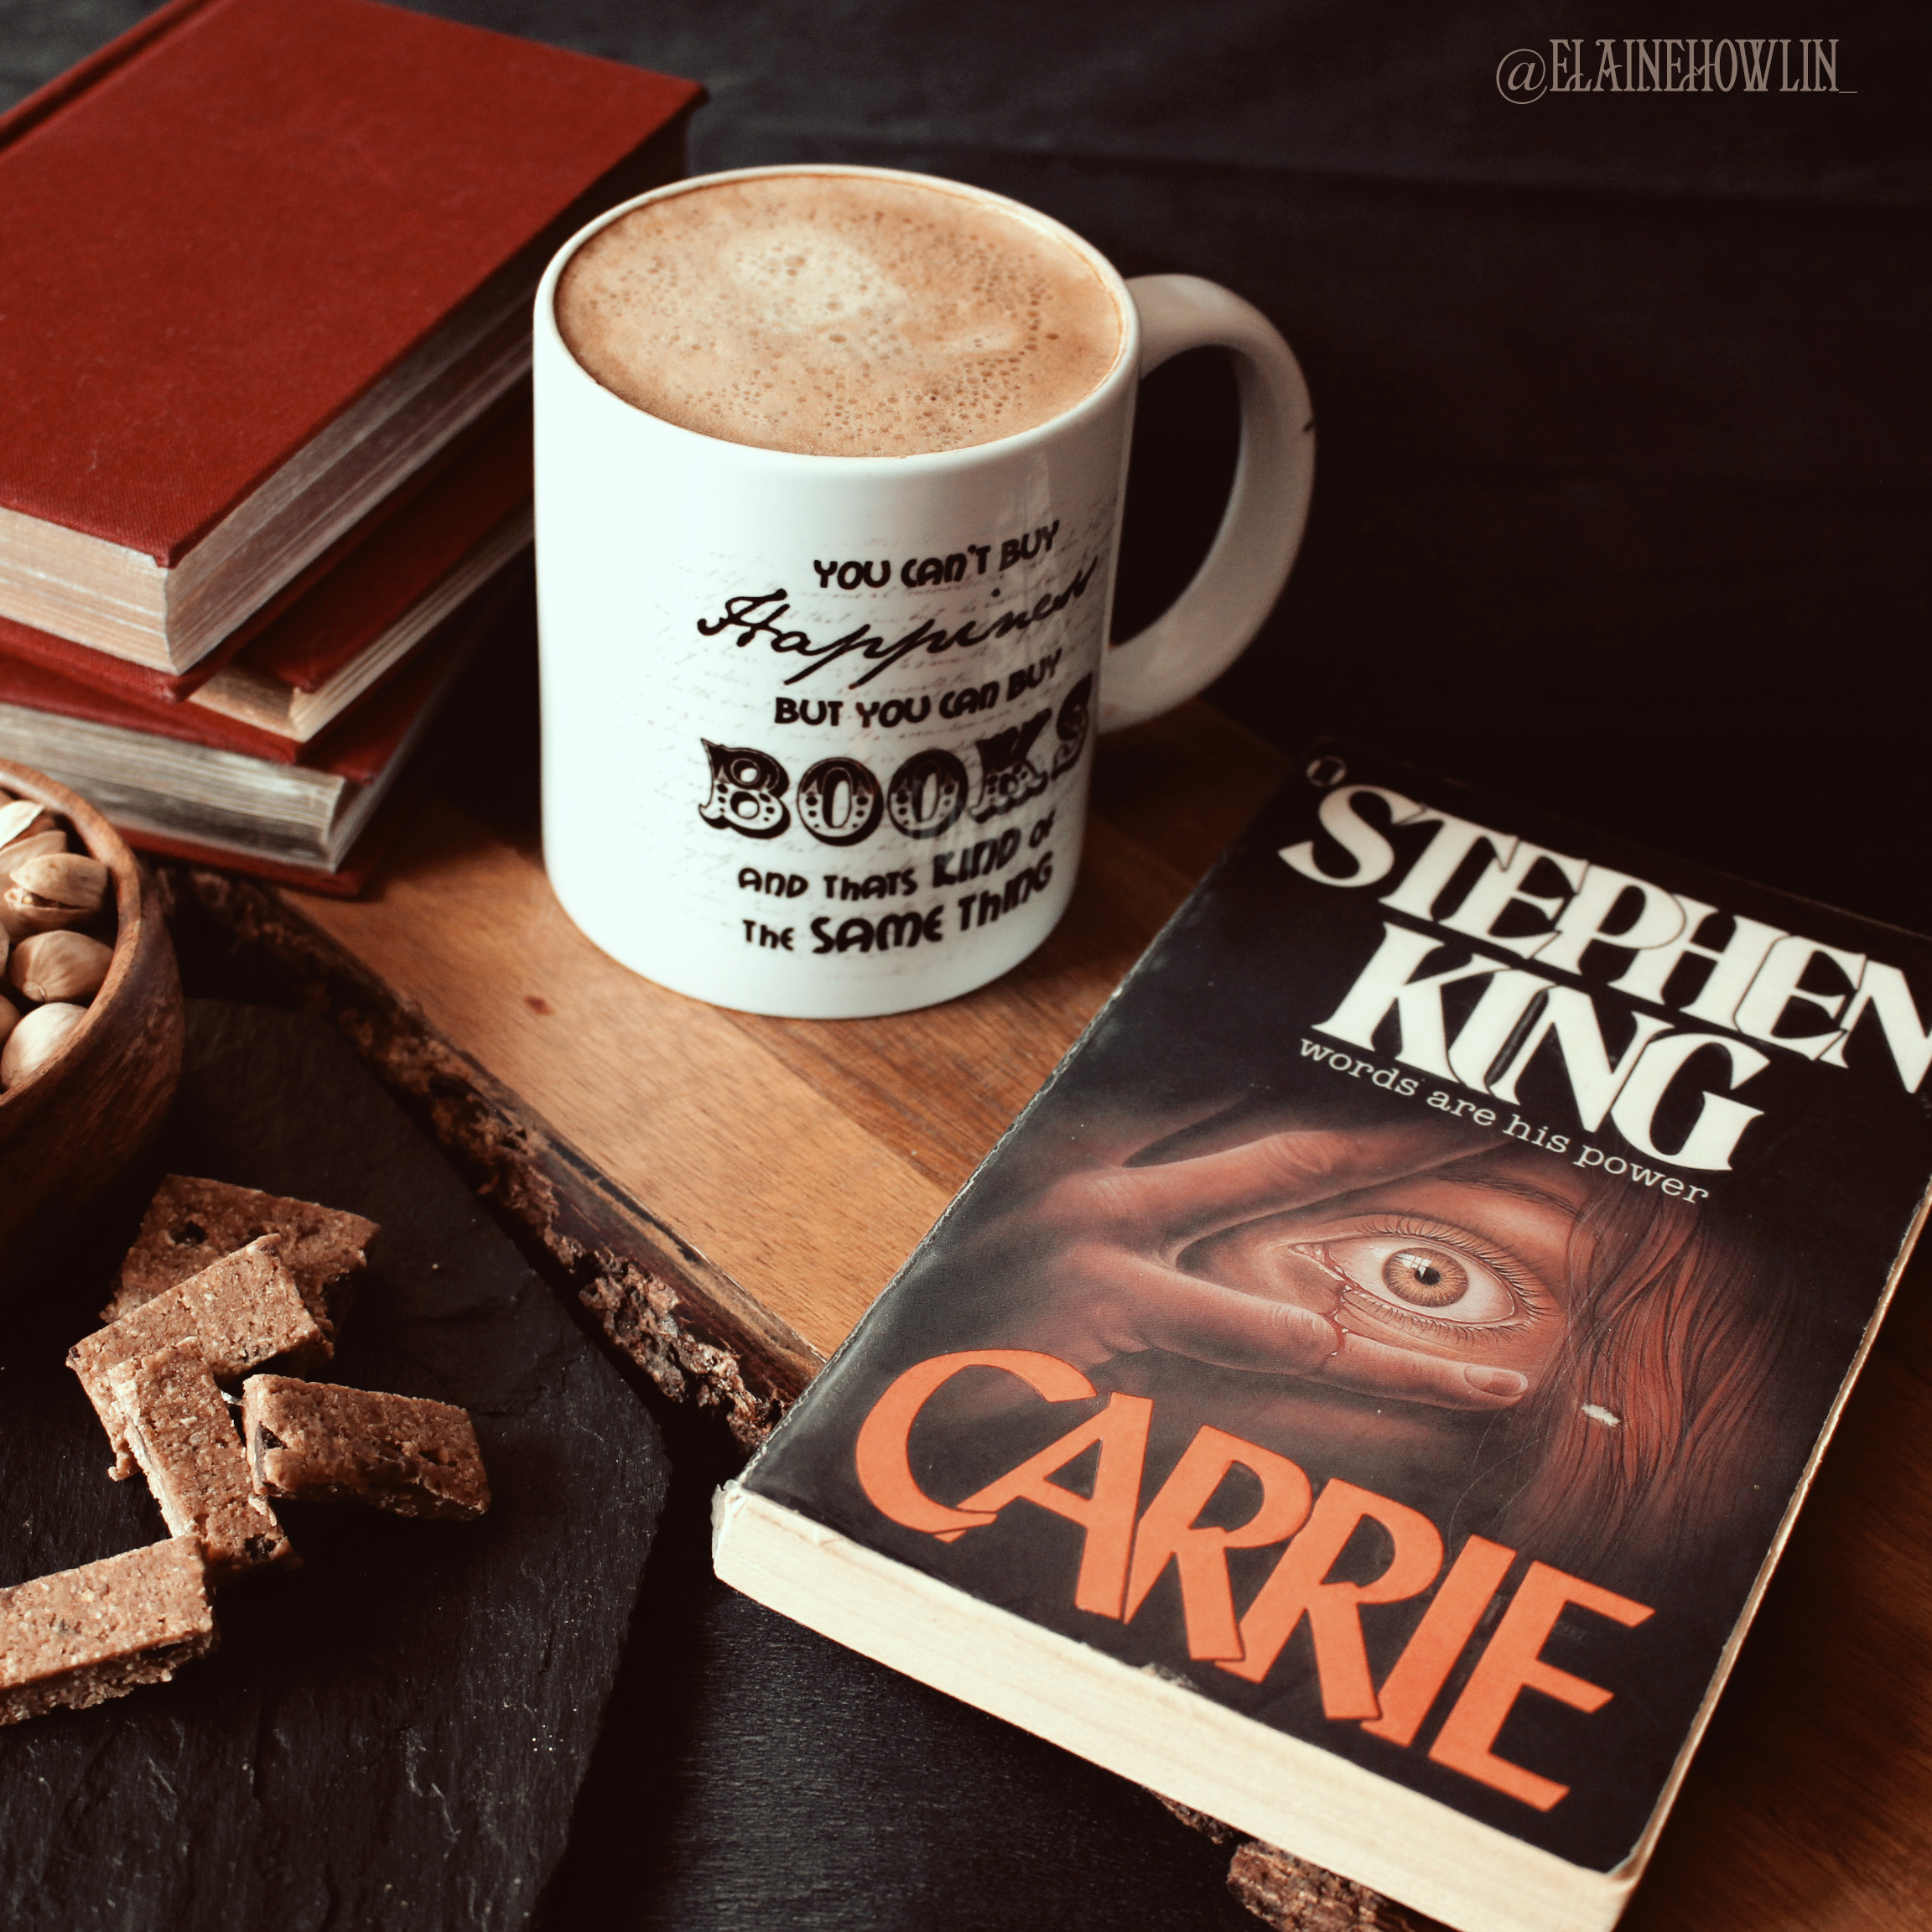 Carrie by Stephen King Elaine Howlin Book Blog